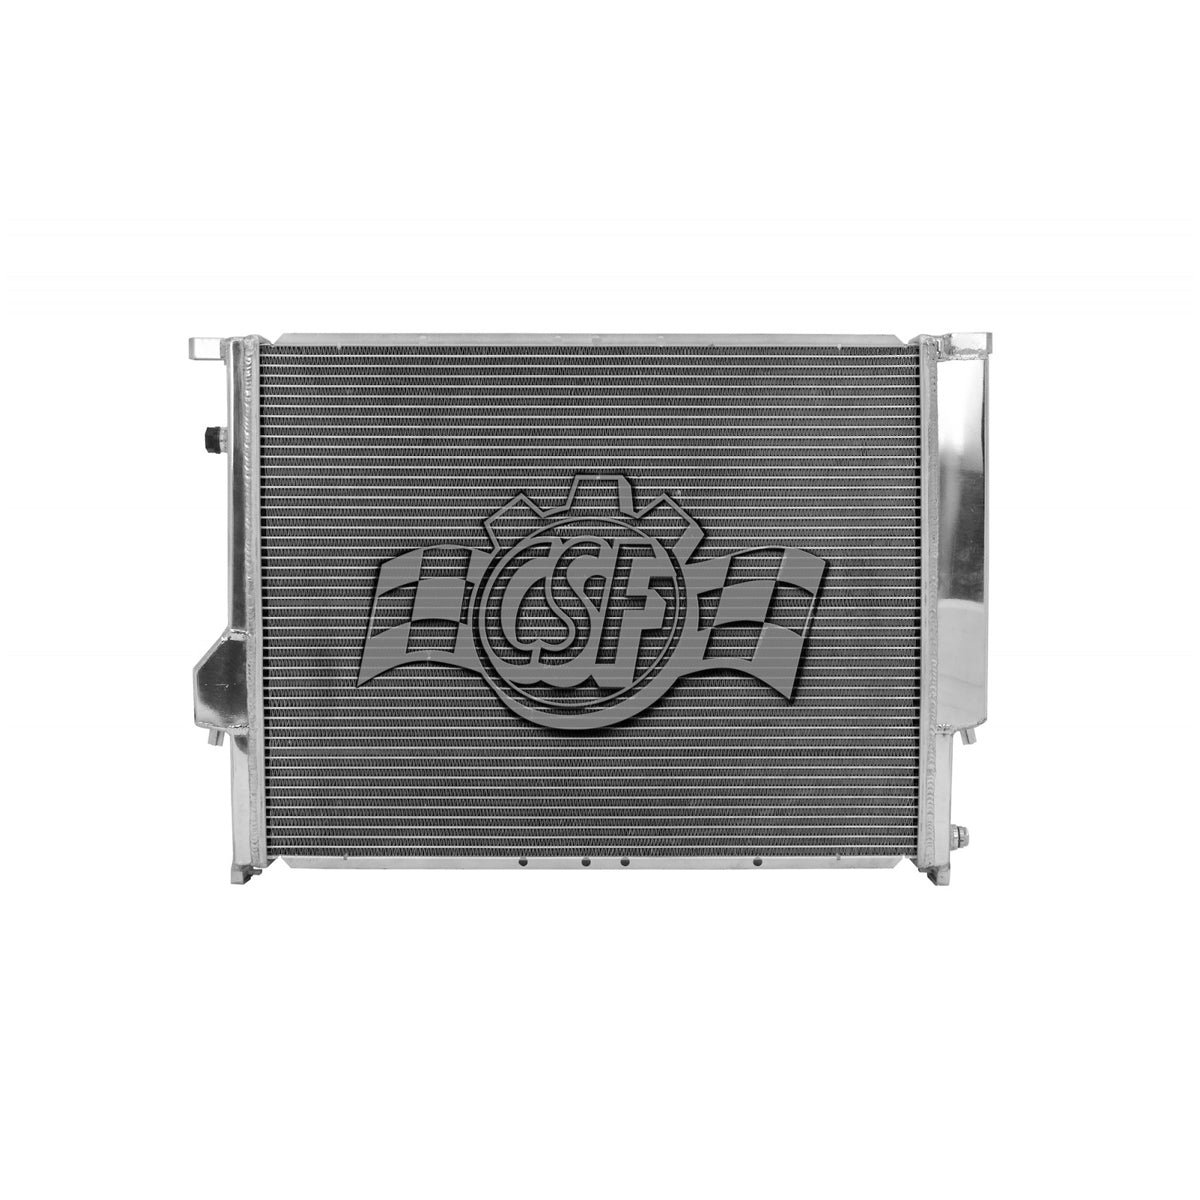 CSF E36 Aluminum Radiator